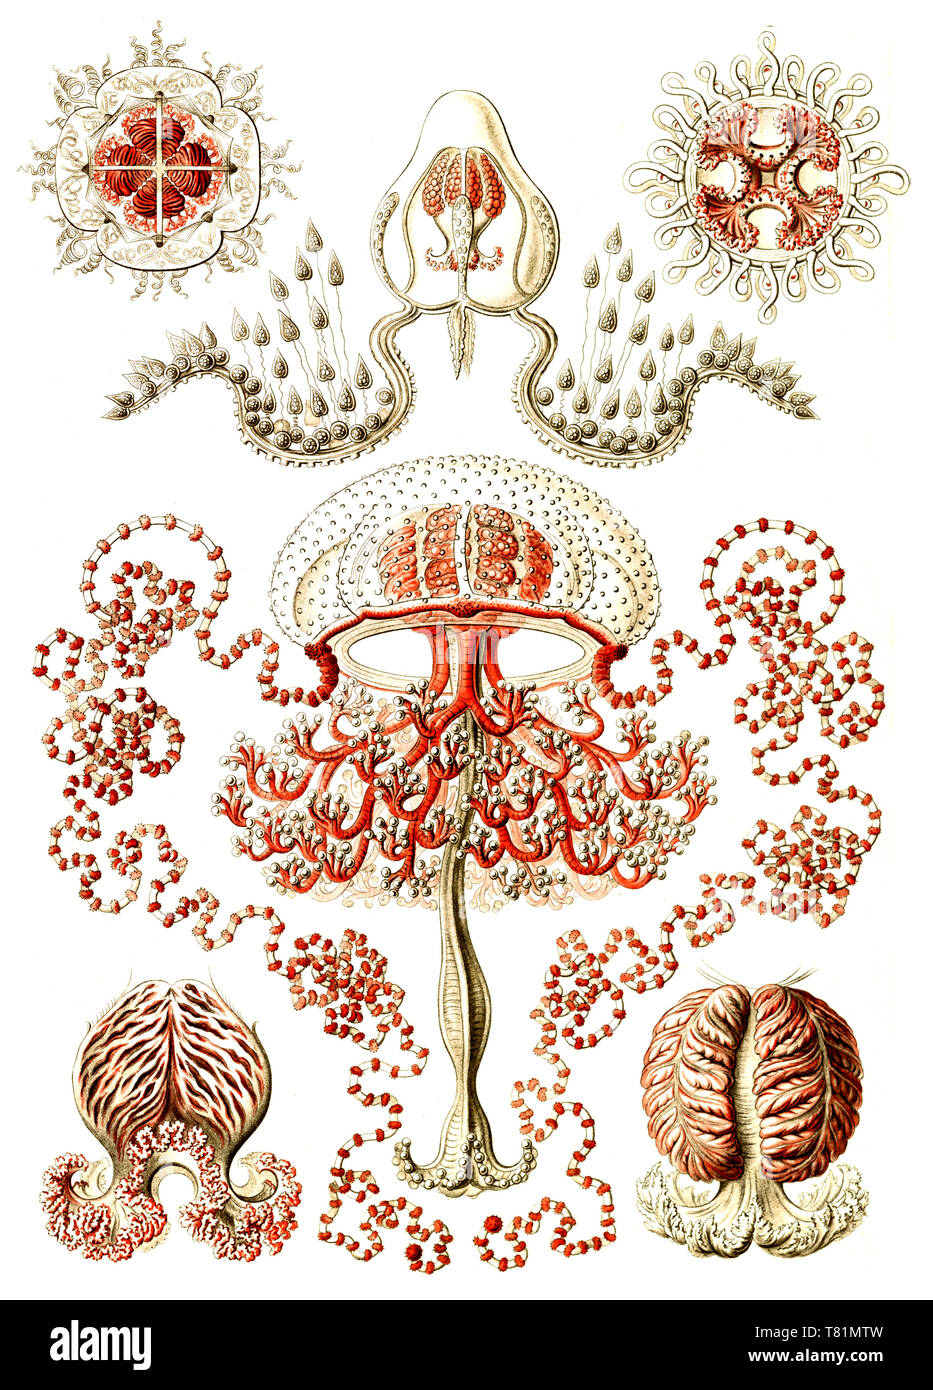 Ernst Haeckel, Anthoathecata, Hydrozoa Stock Photo